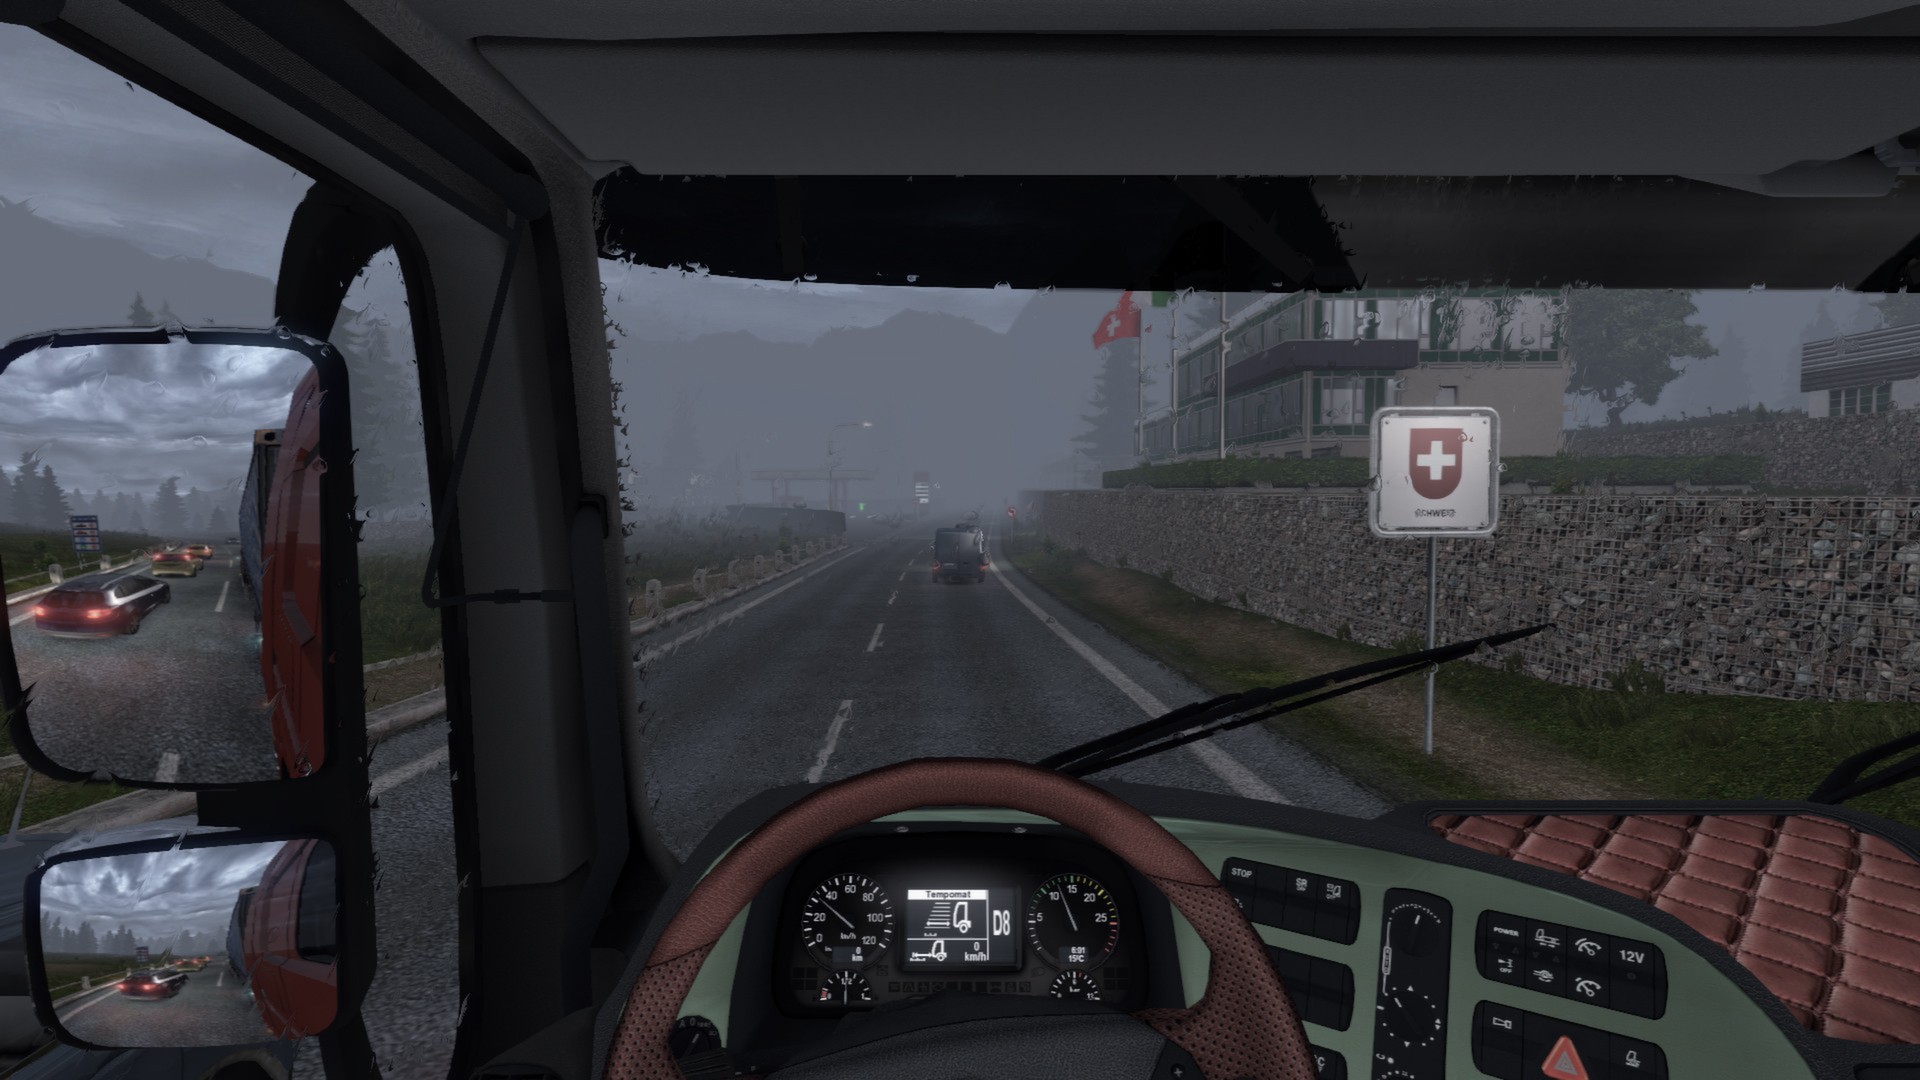 Euro Truck Simulator 2 - Lutris